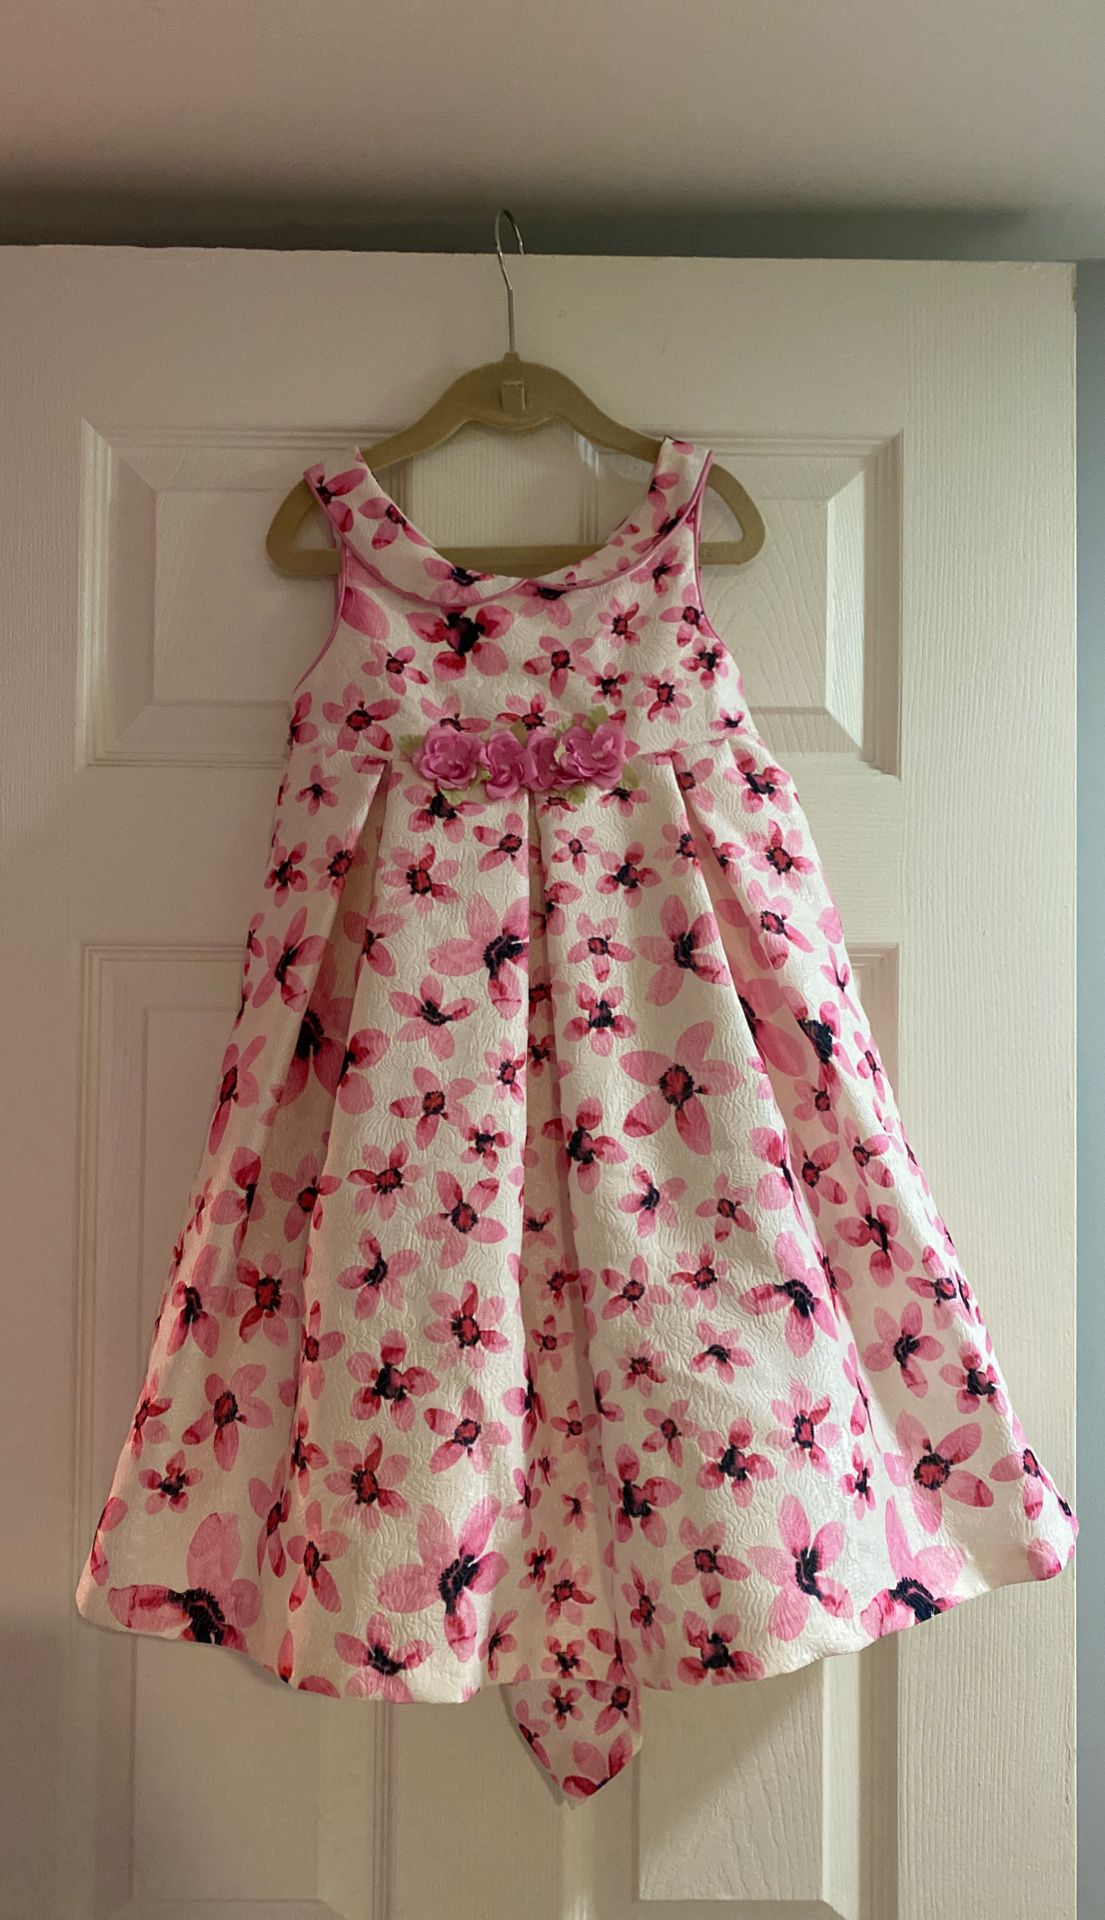 Little girls gown dress - floral print pink flowers - size 5 - Pippa & Julie